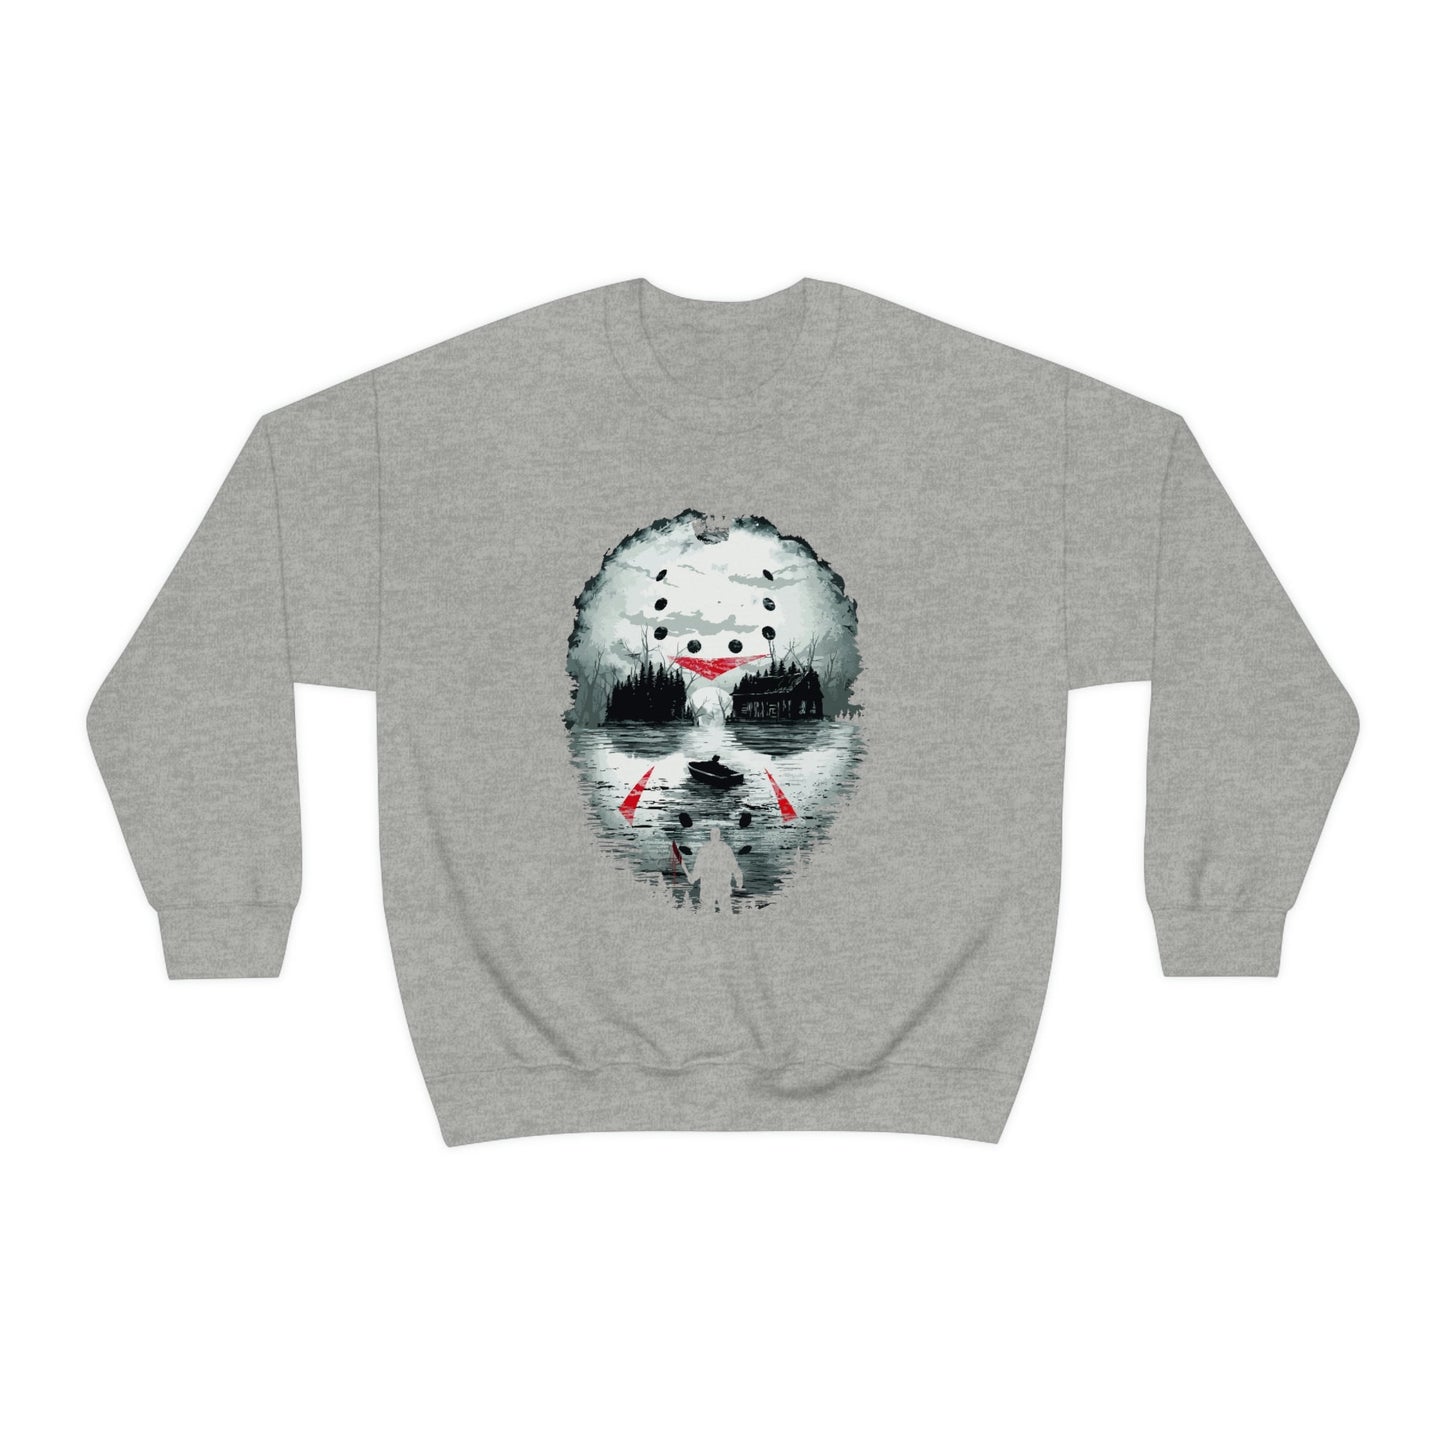 Friday the 13th Sweatshirt, Jason Sweatshirt, Horror Hoodie, Horror merch, Jason, Horror aesthetic, Friday the 13th